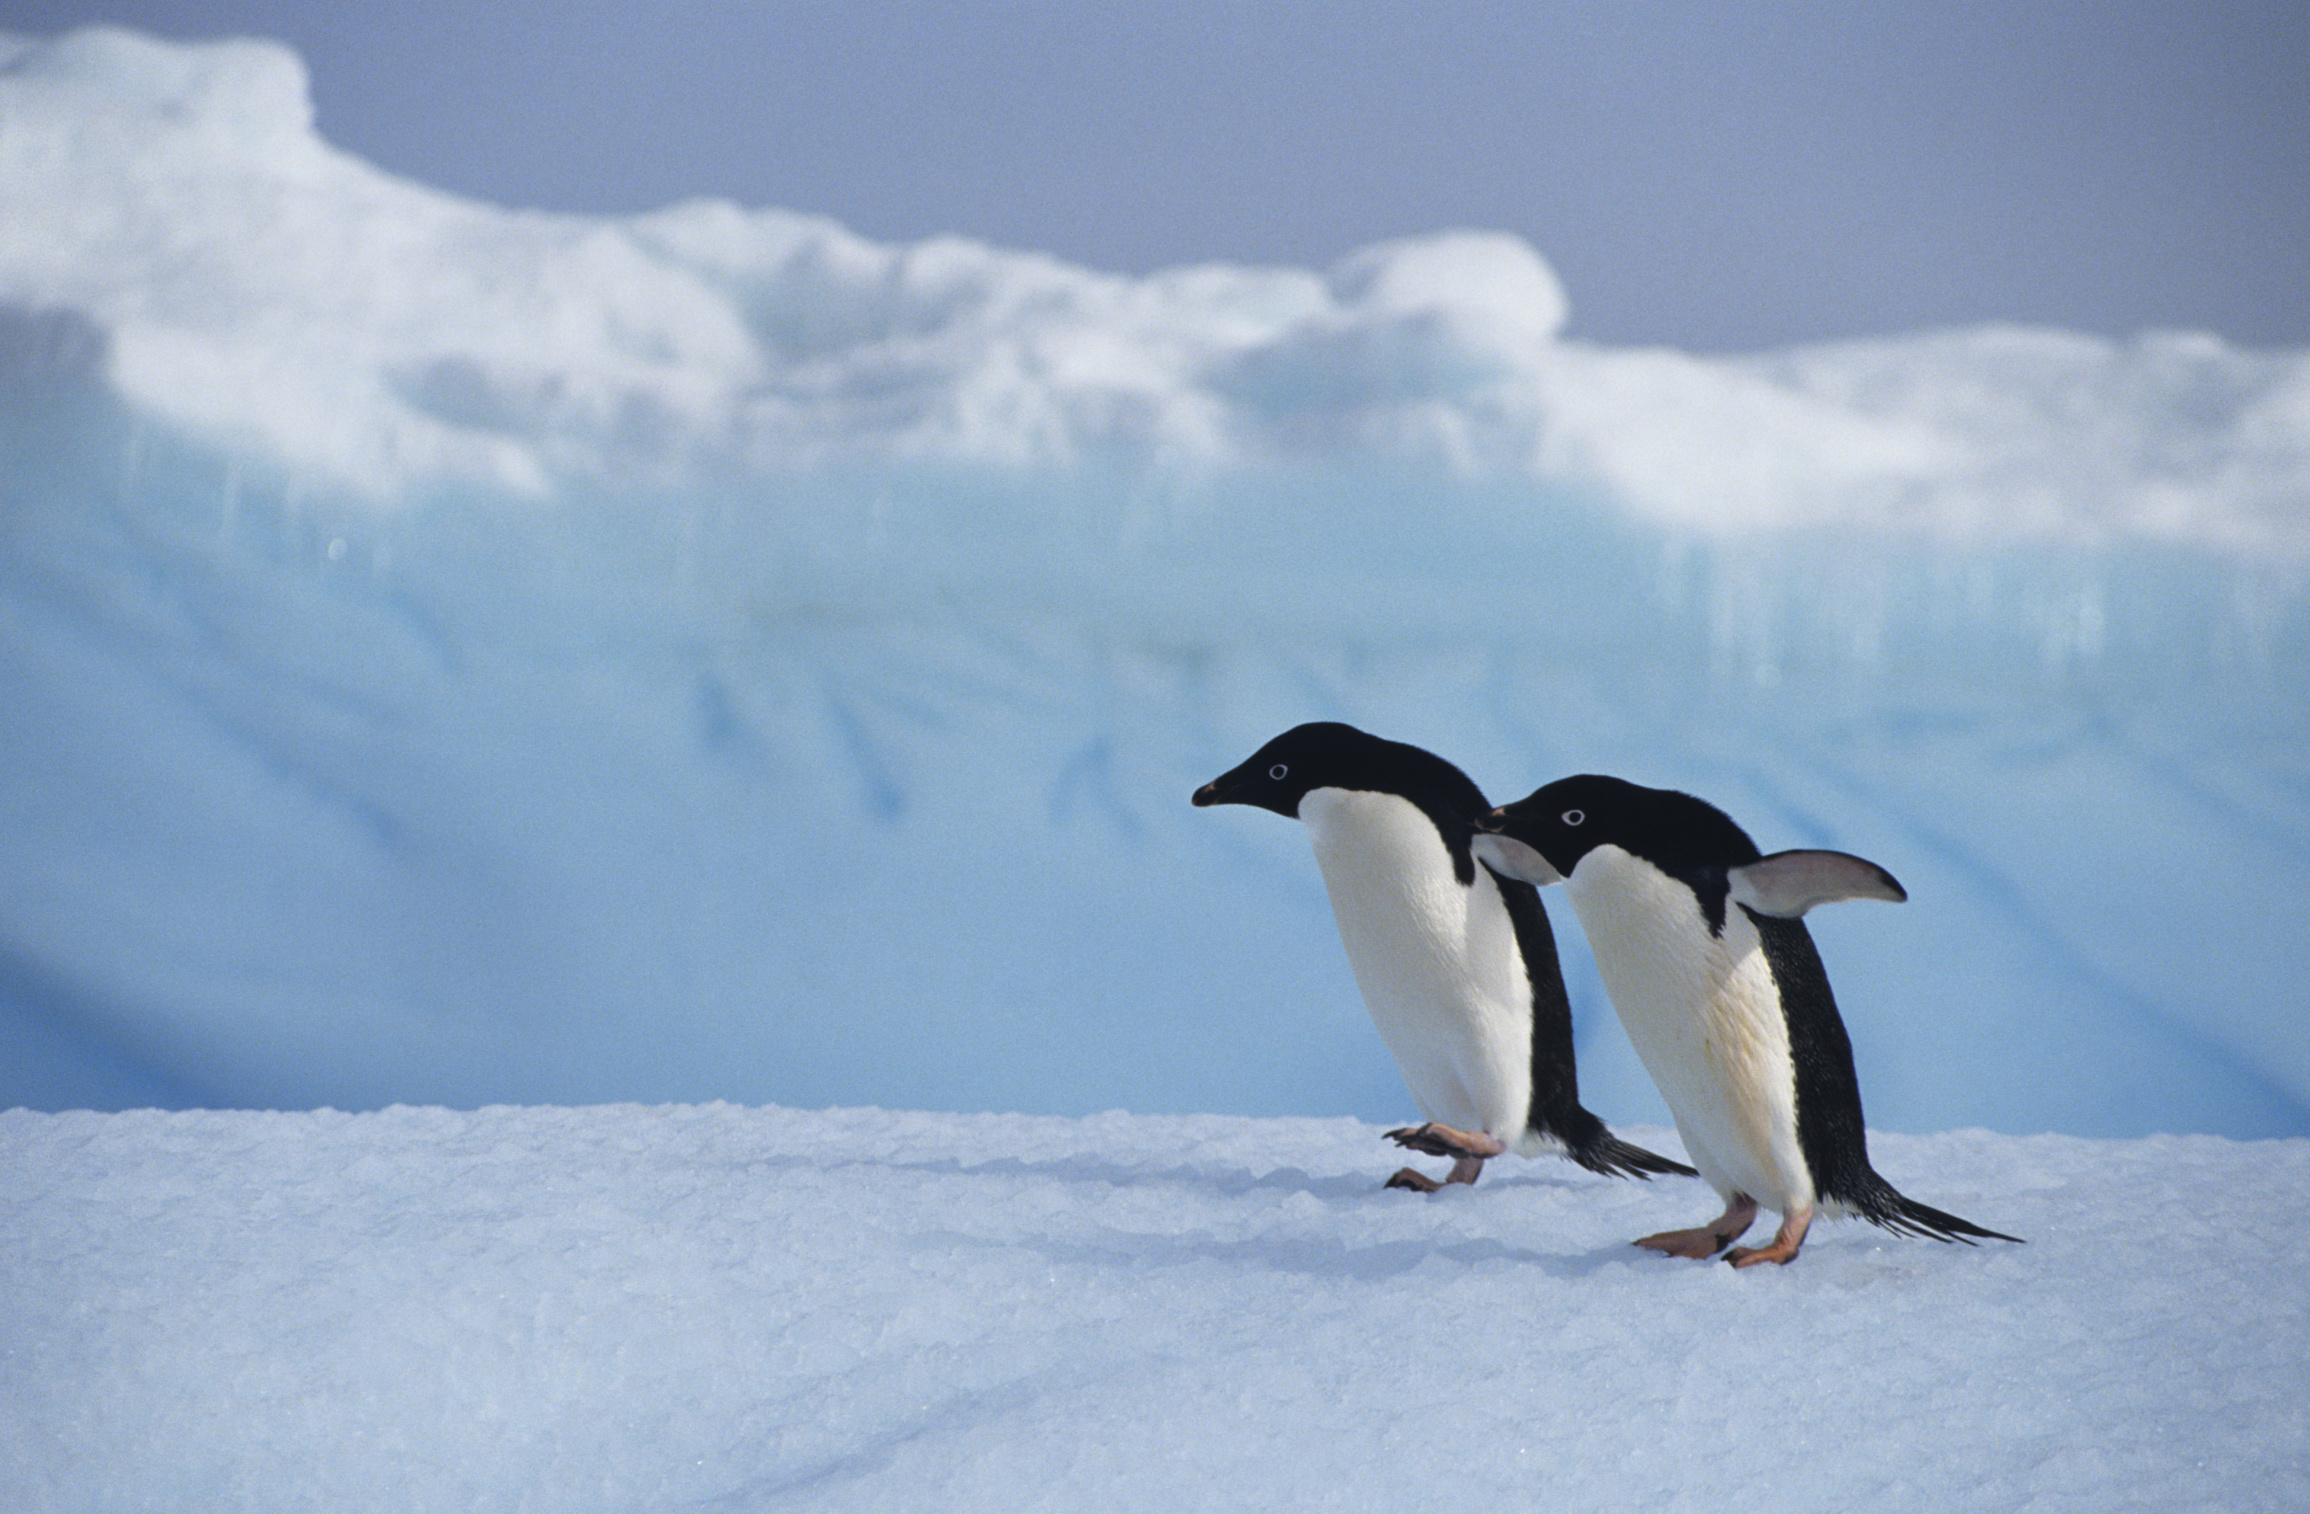 Two penguins walking on ice in Antarctica